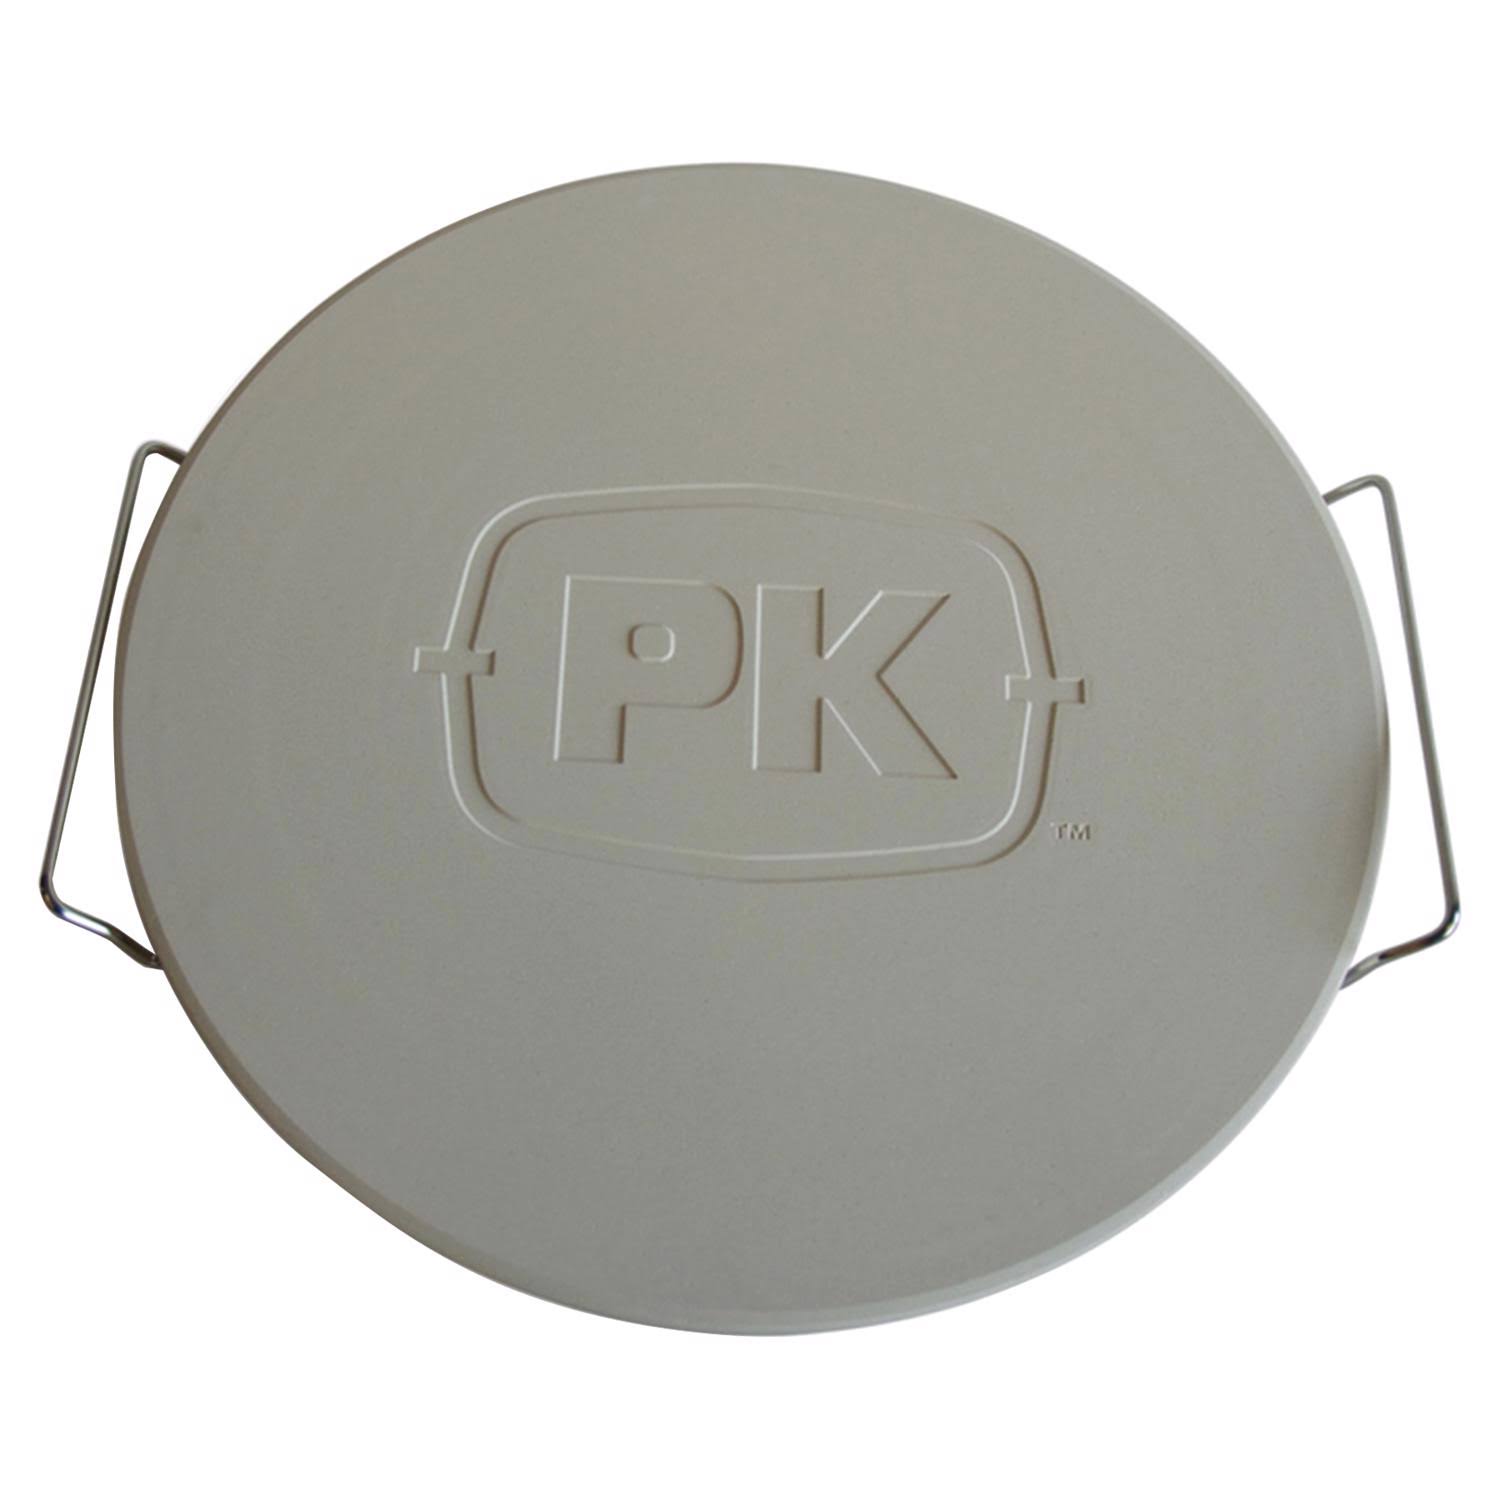 Portable Kitchen Grills Ceramic Pizza Stone - 14" Diameter